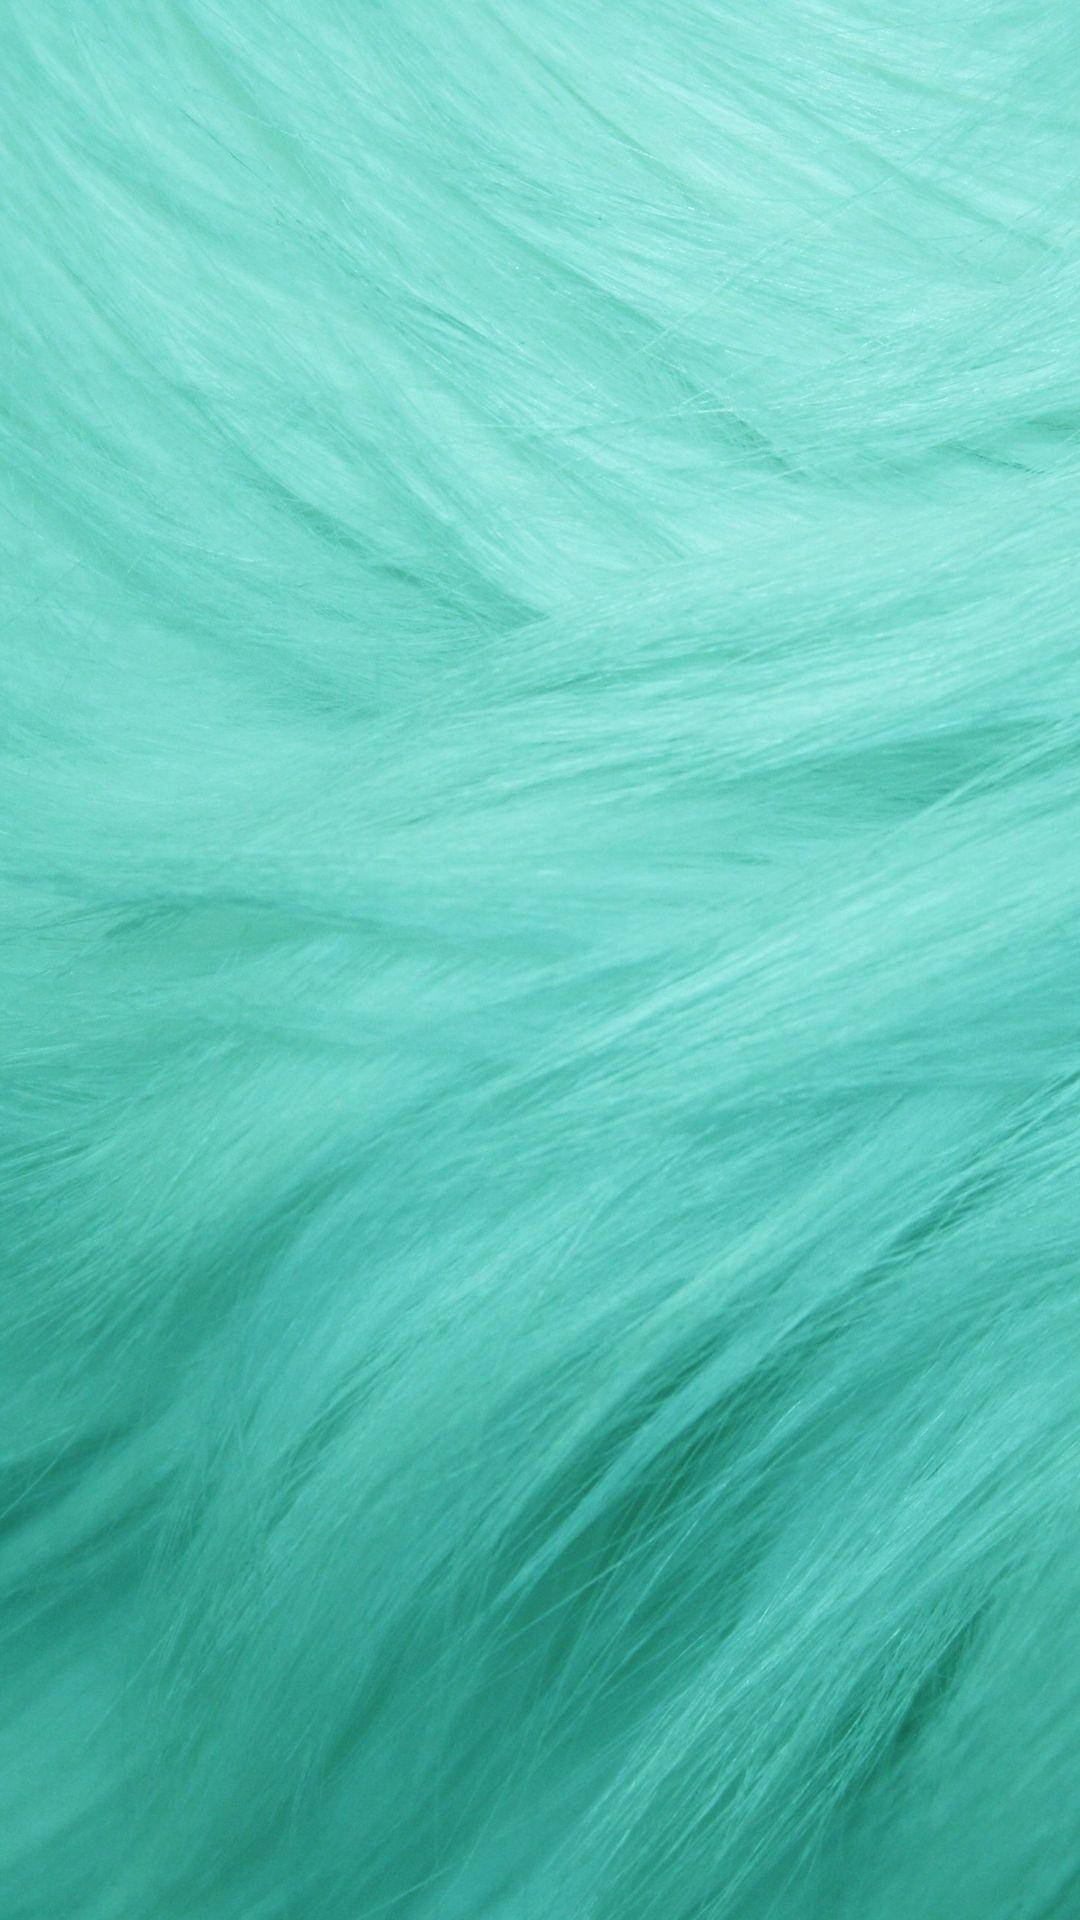 Fur Texture Mint Green Iphone Wallpaper